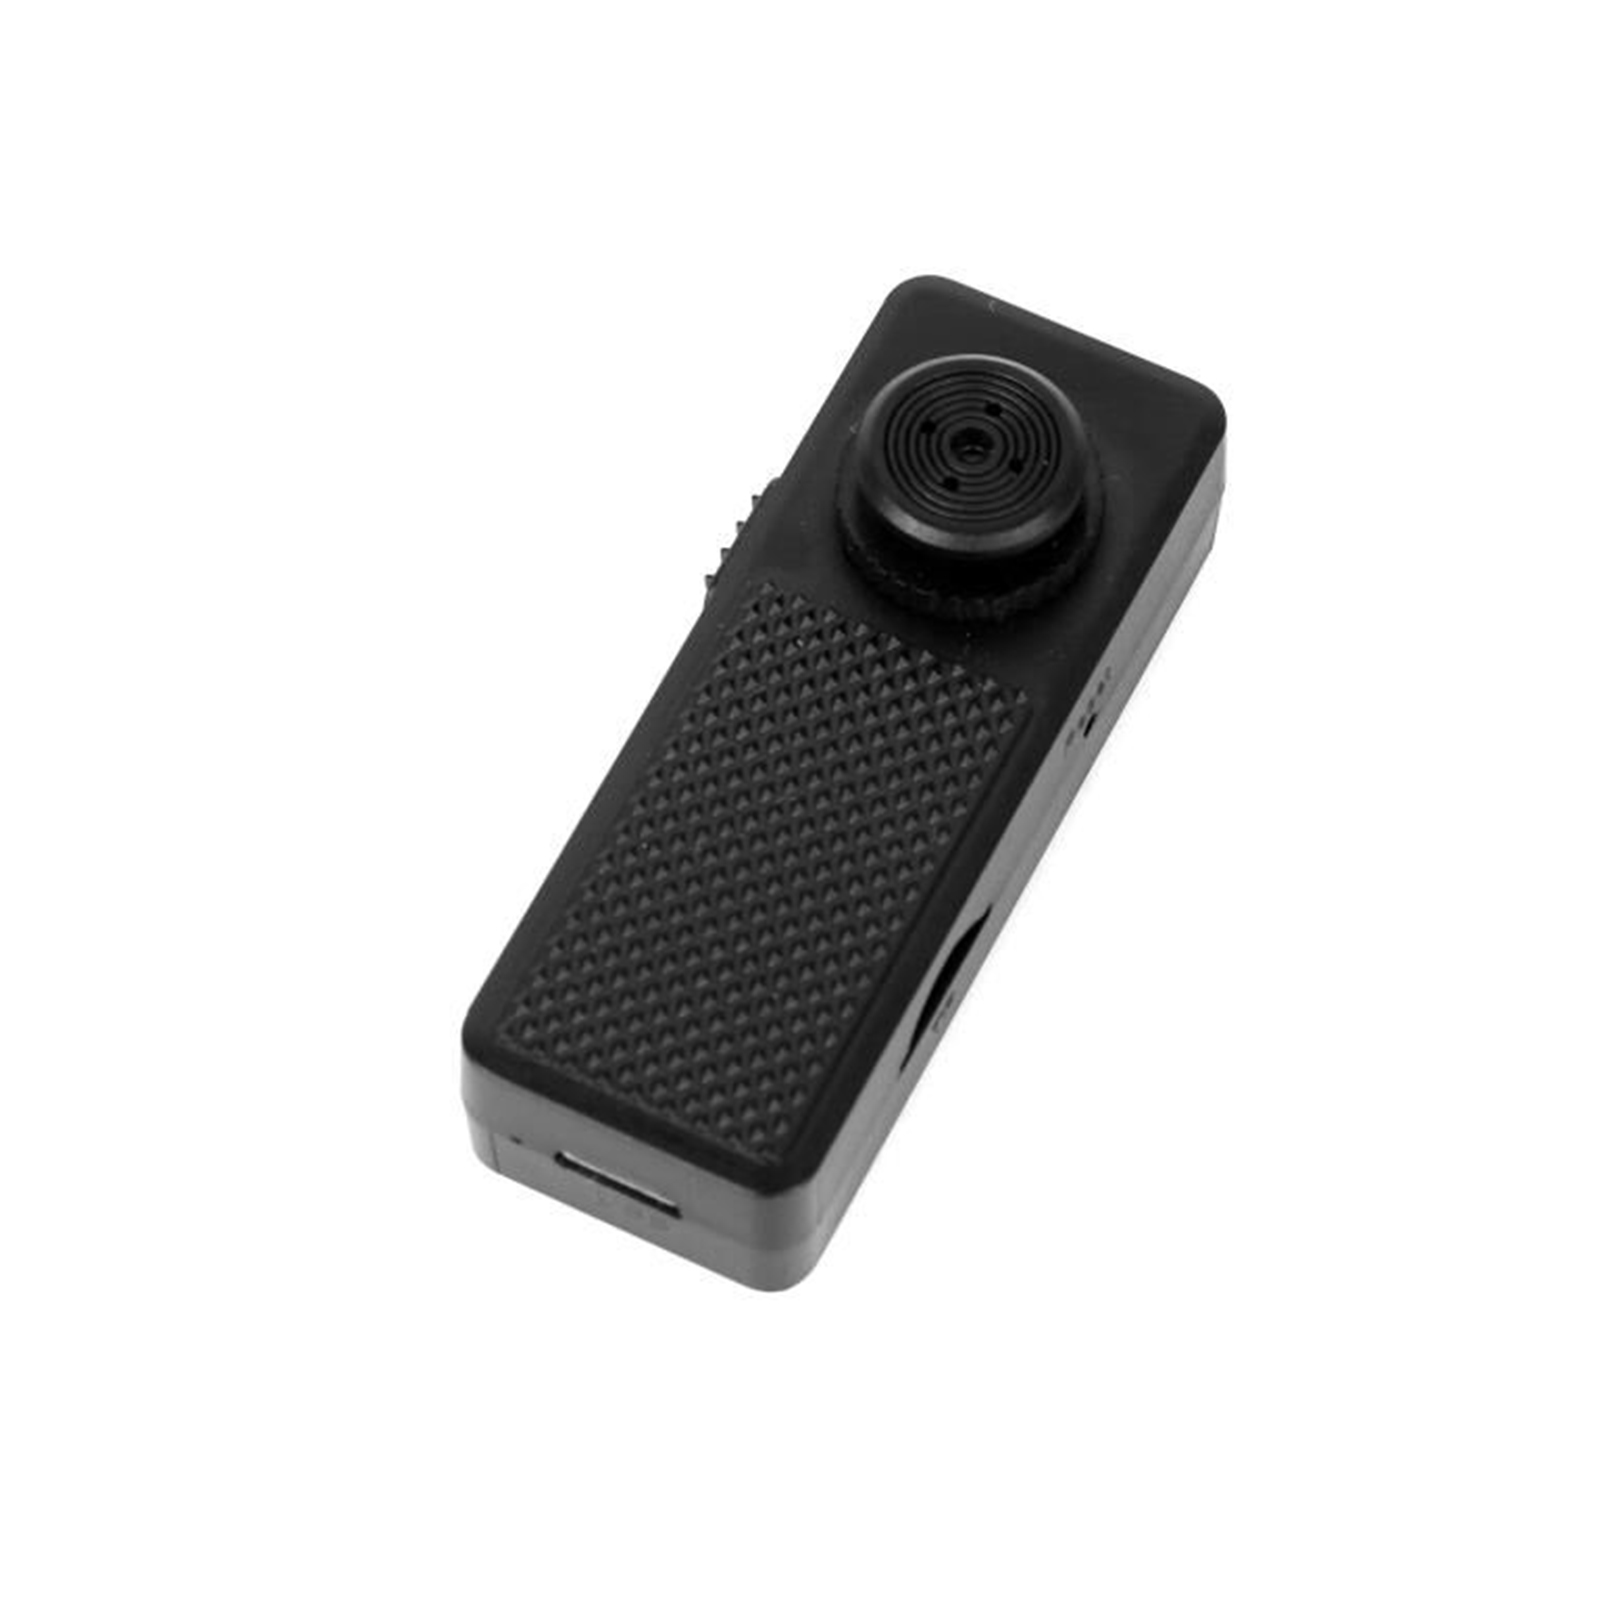 Hd Mini Camera Wifi 4k Shirt Button Camera Small P2p/ap Monitor Motion Detection Video H.264 Video Recorder Standard -No Memory Card